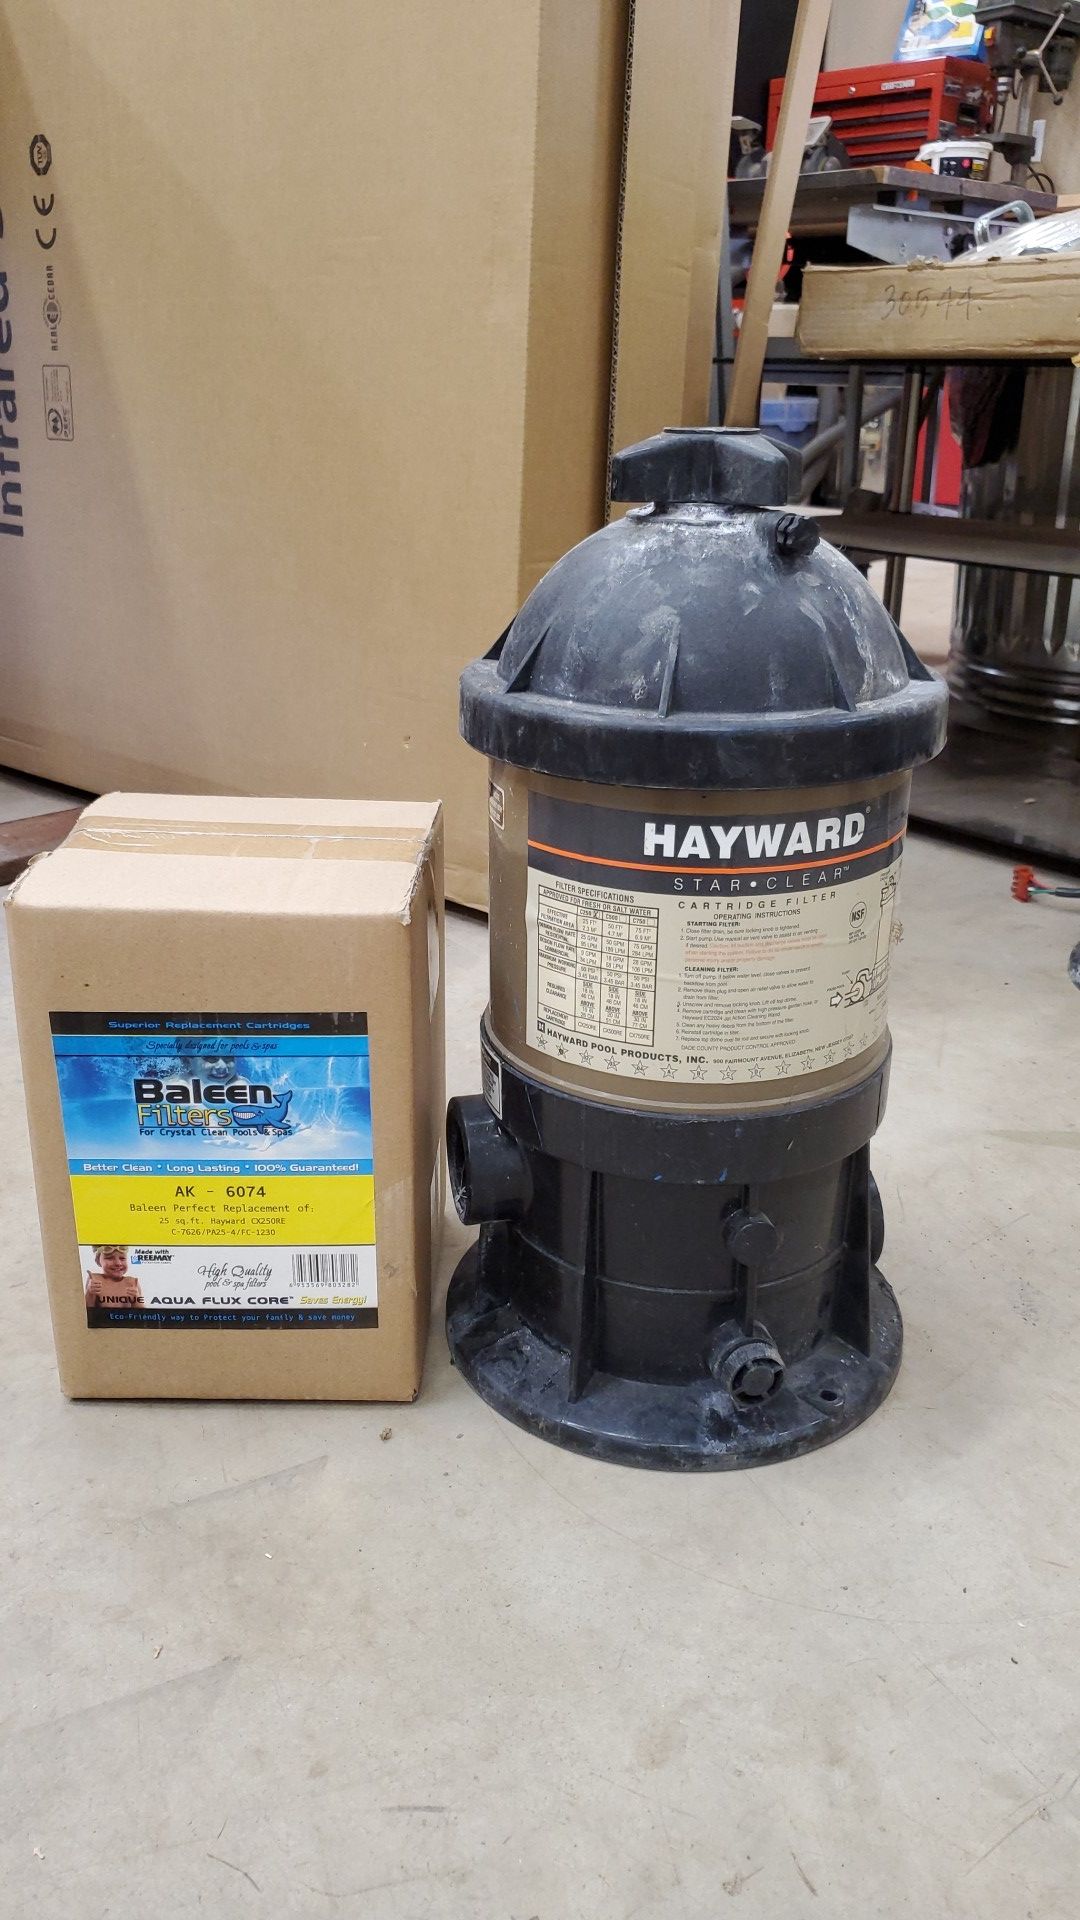 Hayward c250 pool filter